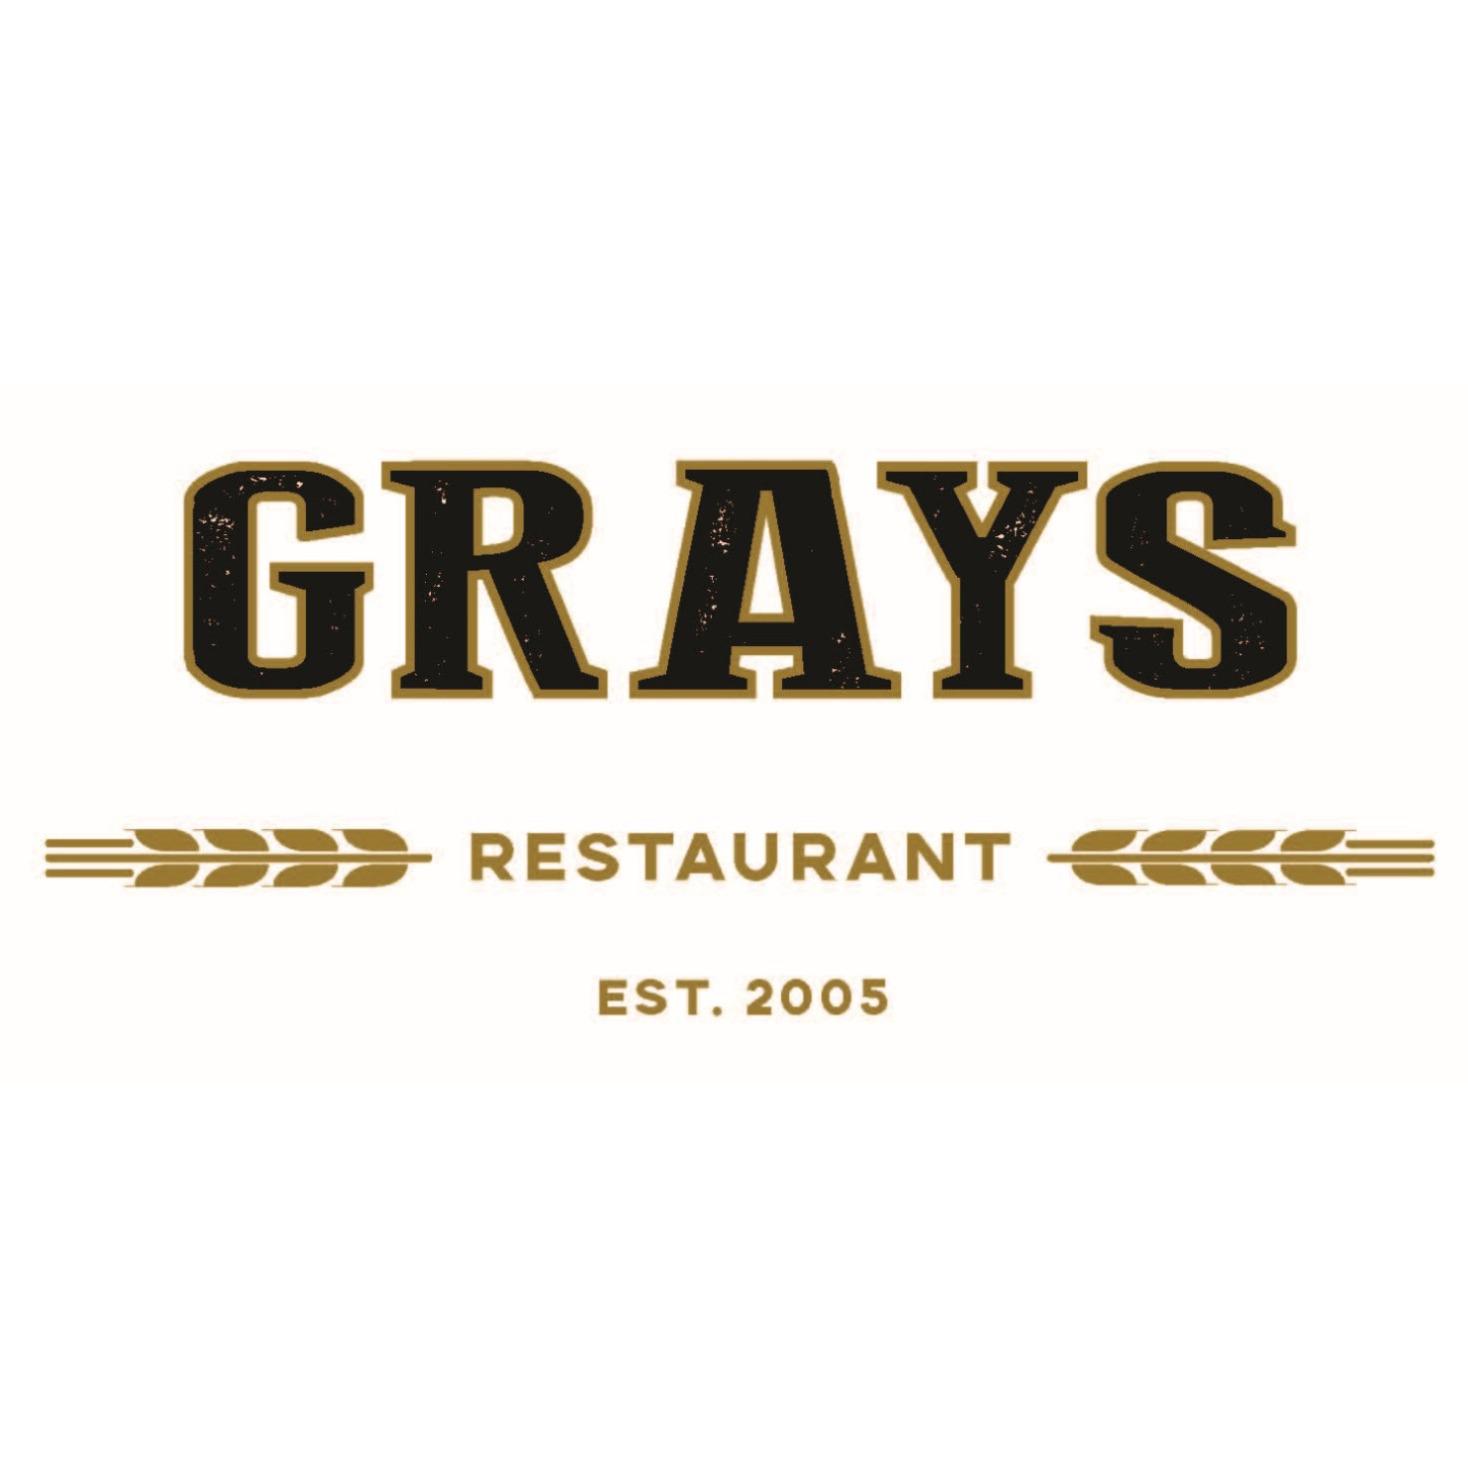 Grays Restaurant & Bar